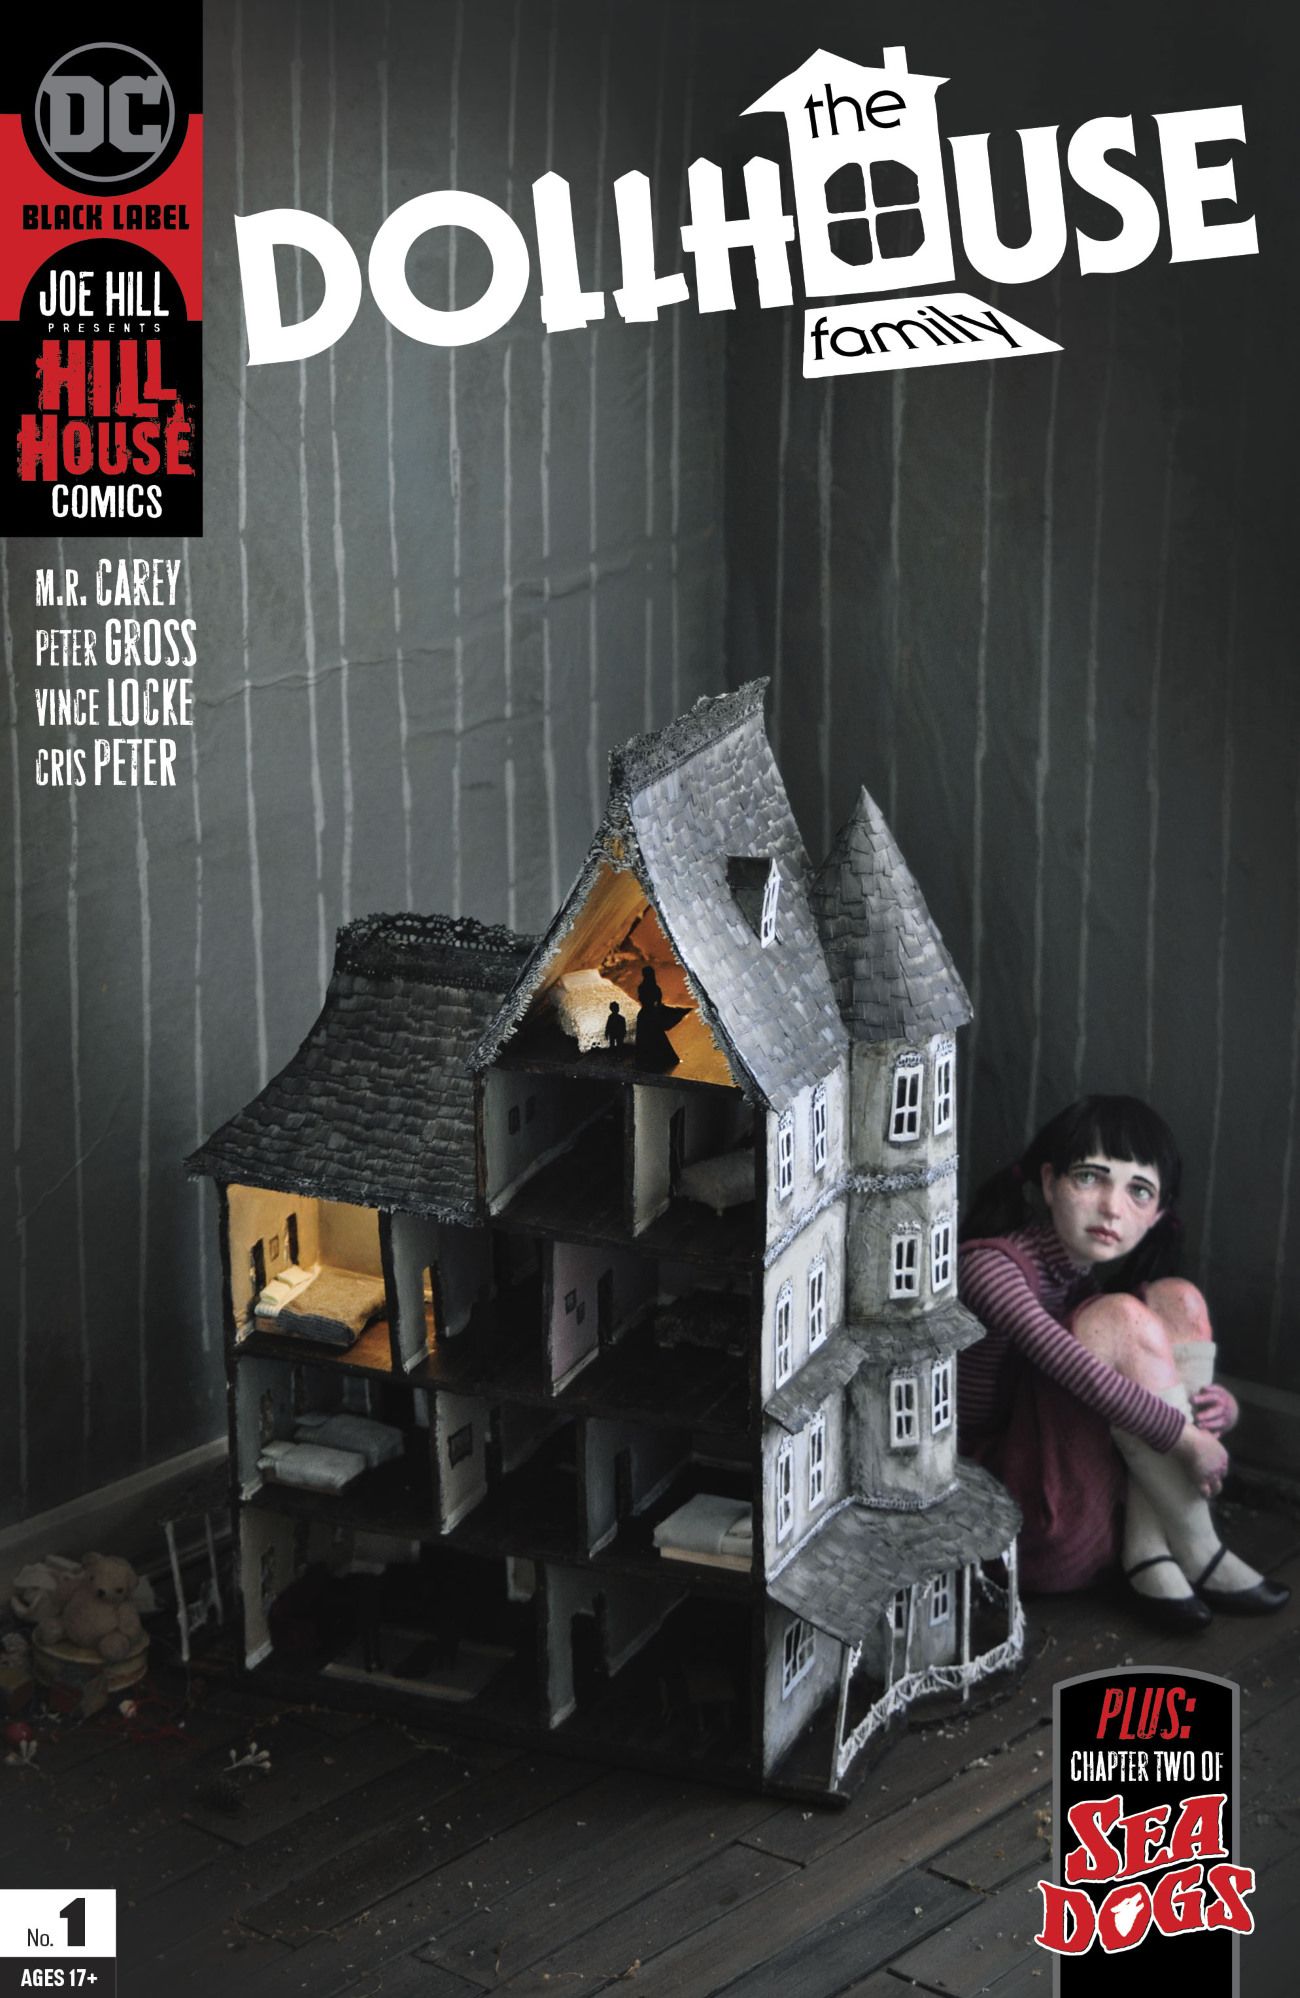 The Dollhouse Family Comic Cover Art